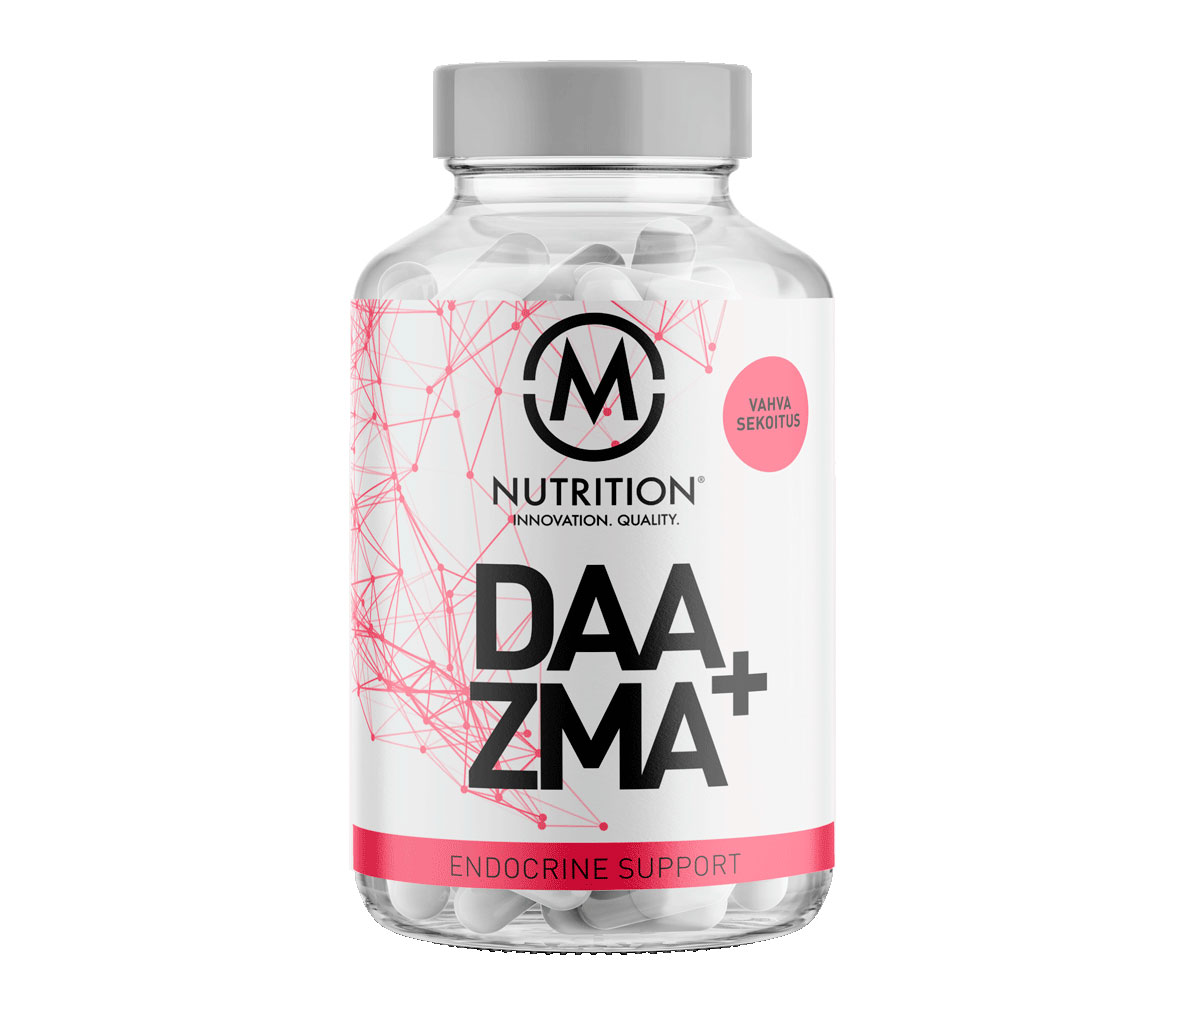 M-Nutrition DAA+ZMA, 180 kaps.